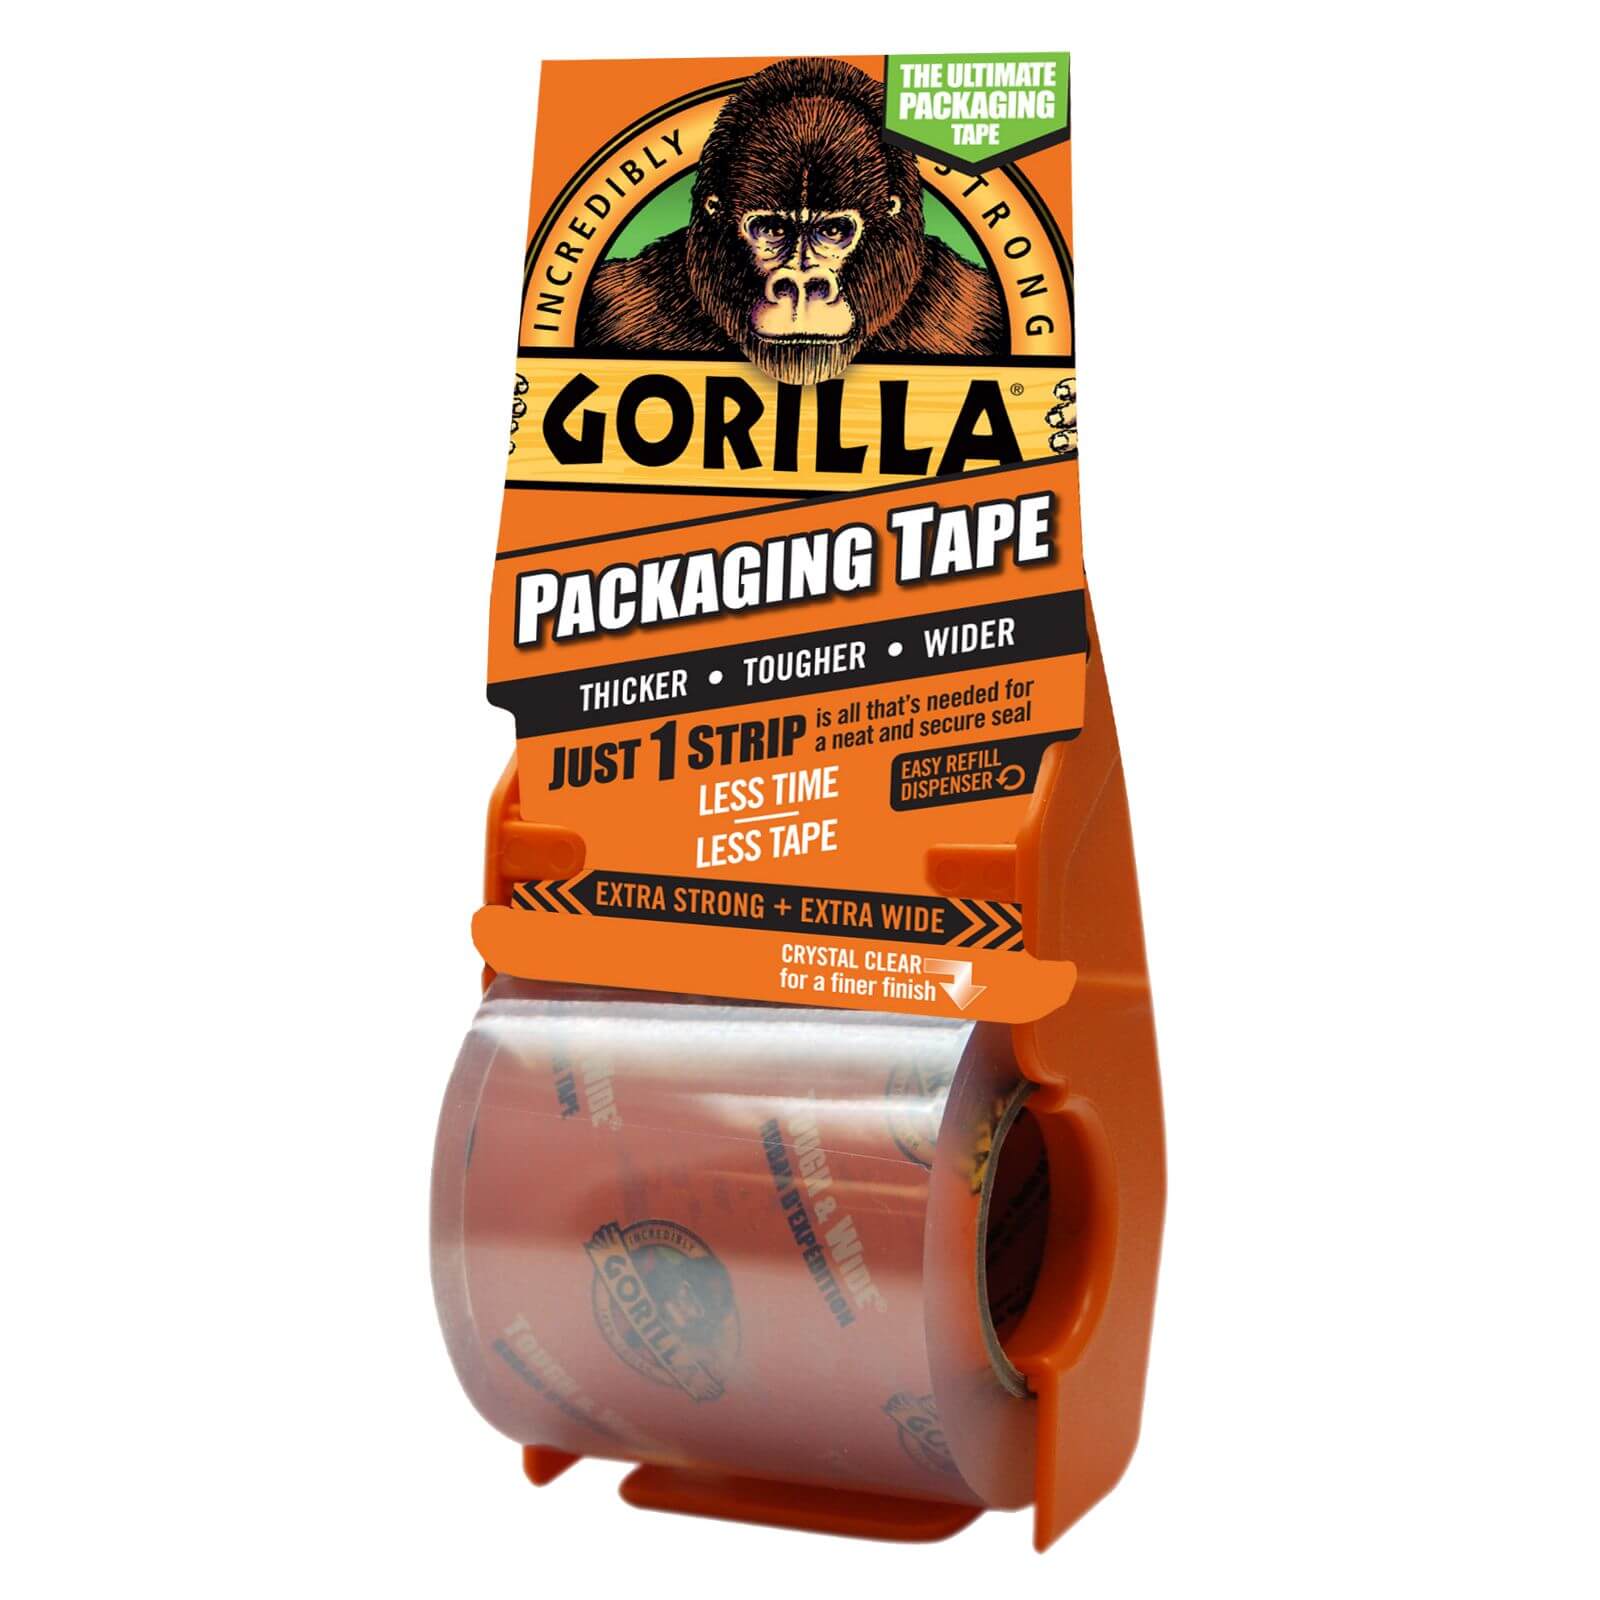 Gorilla Packaging Tape - 18m